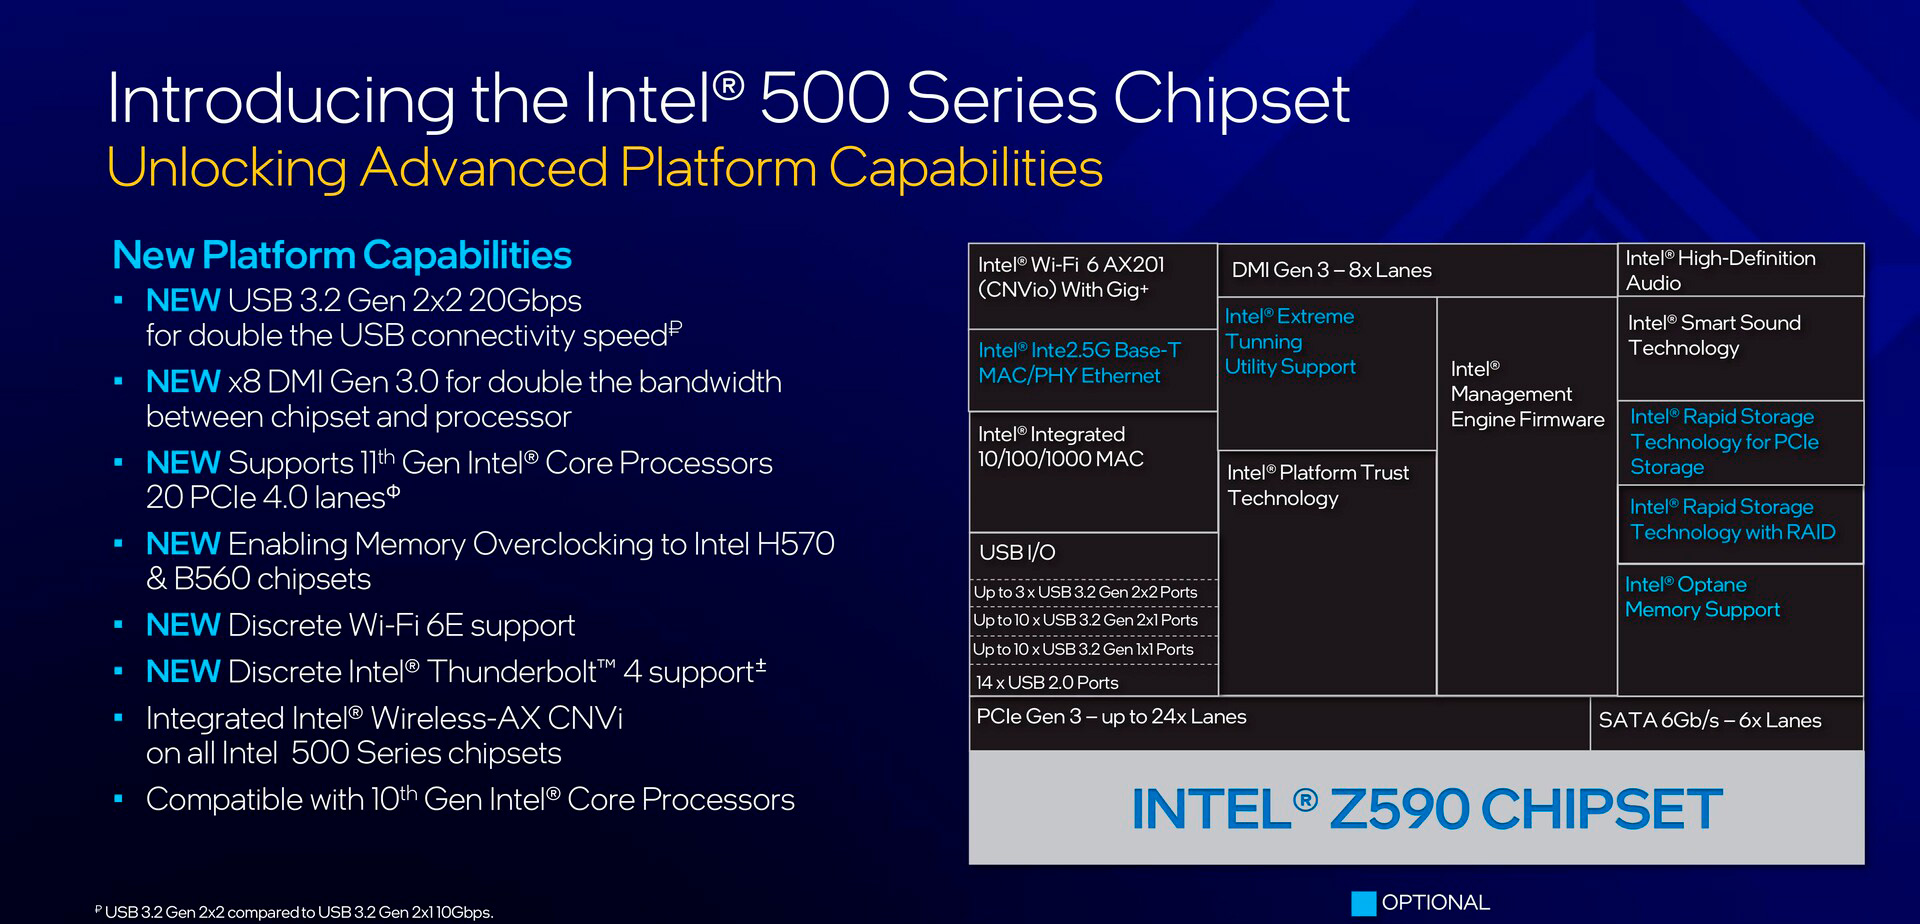 Intel Core 11th Gen (Rocket Lake-S): обзор. Оцениваем архитектуру Cypress Cove на примере Core i9-11900T, i7-11700К, i5-11600КF, i5-11400F